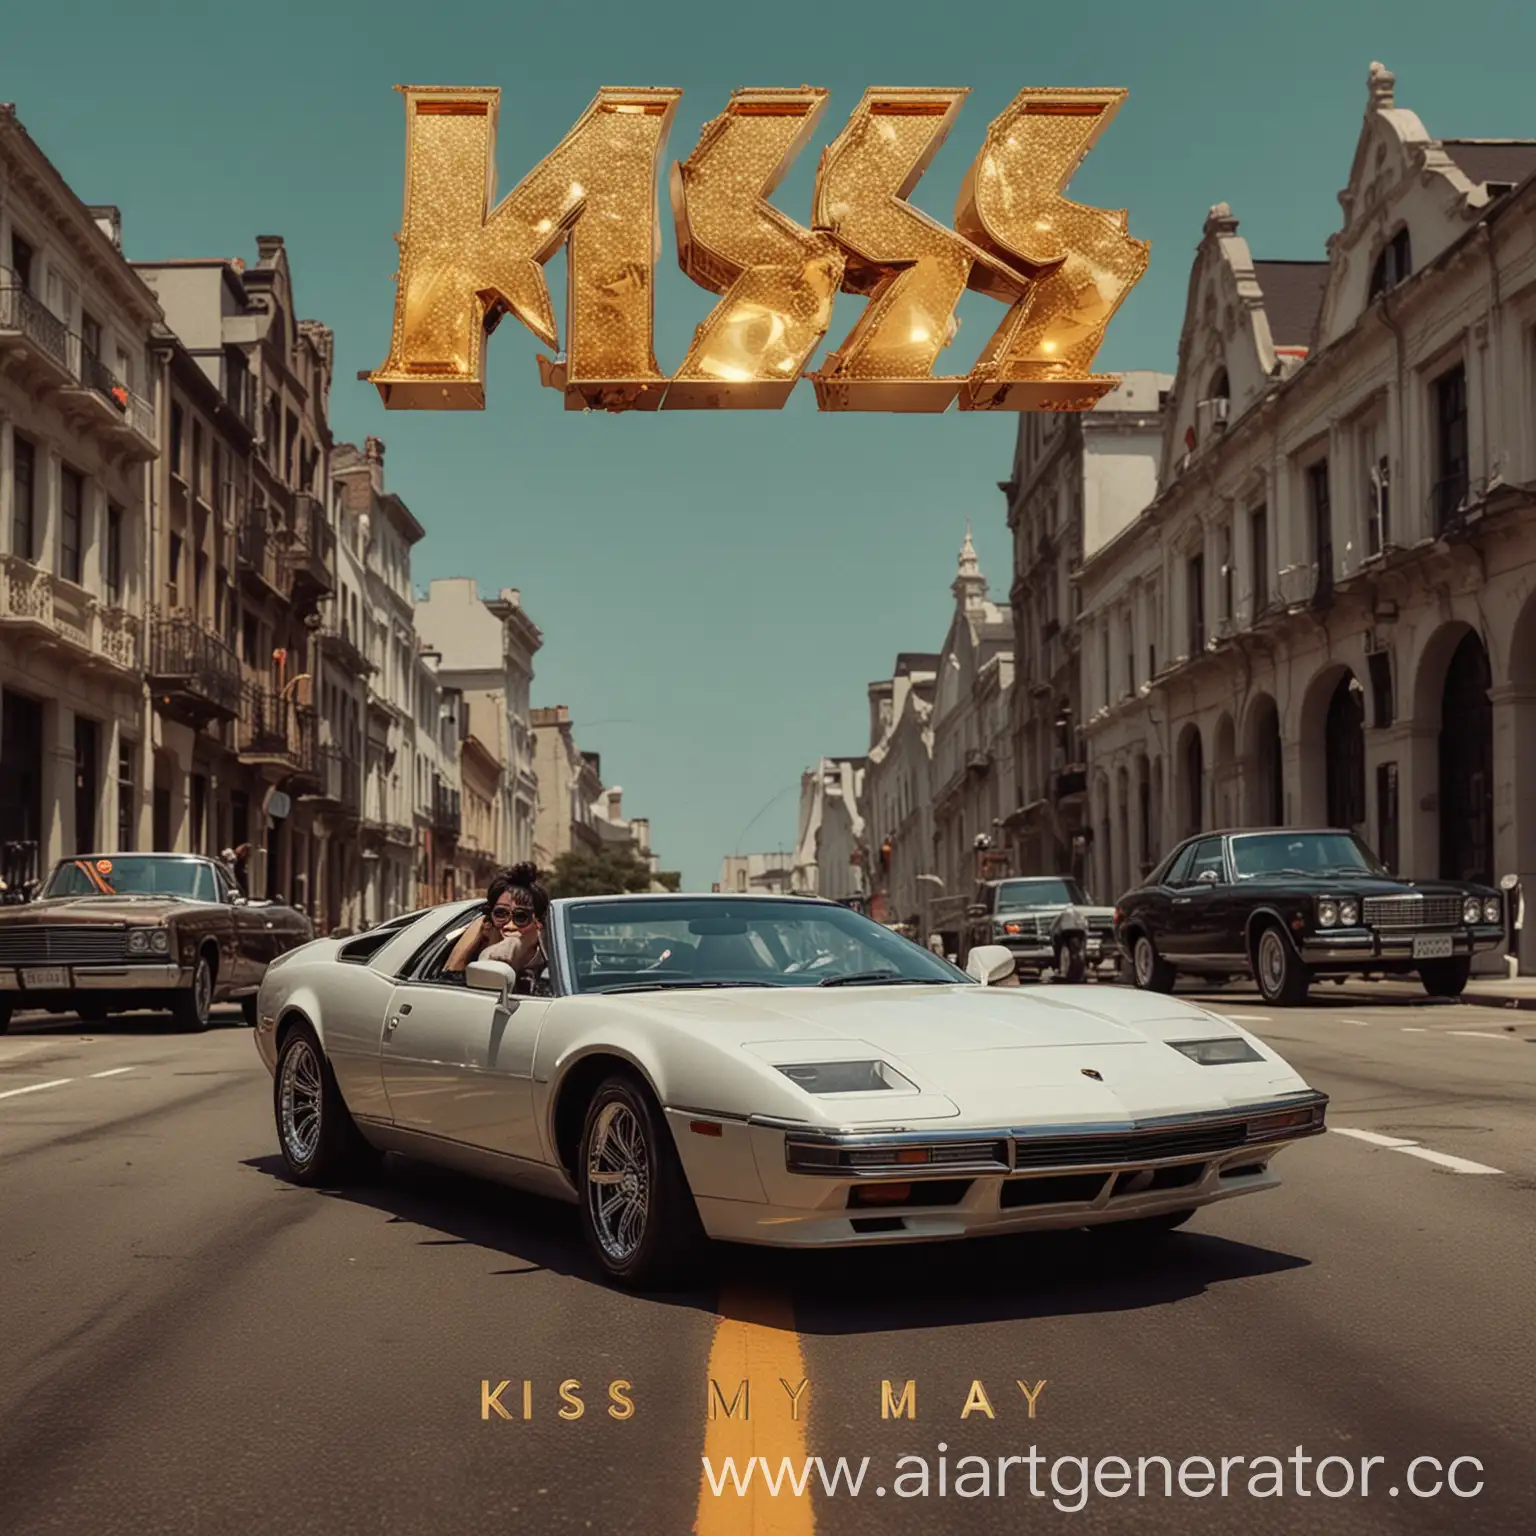 обложка для трека, рэп, большими буквами без ошибок "KISS MY DAY", дорогие машины, kiss my day